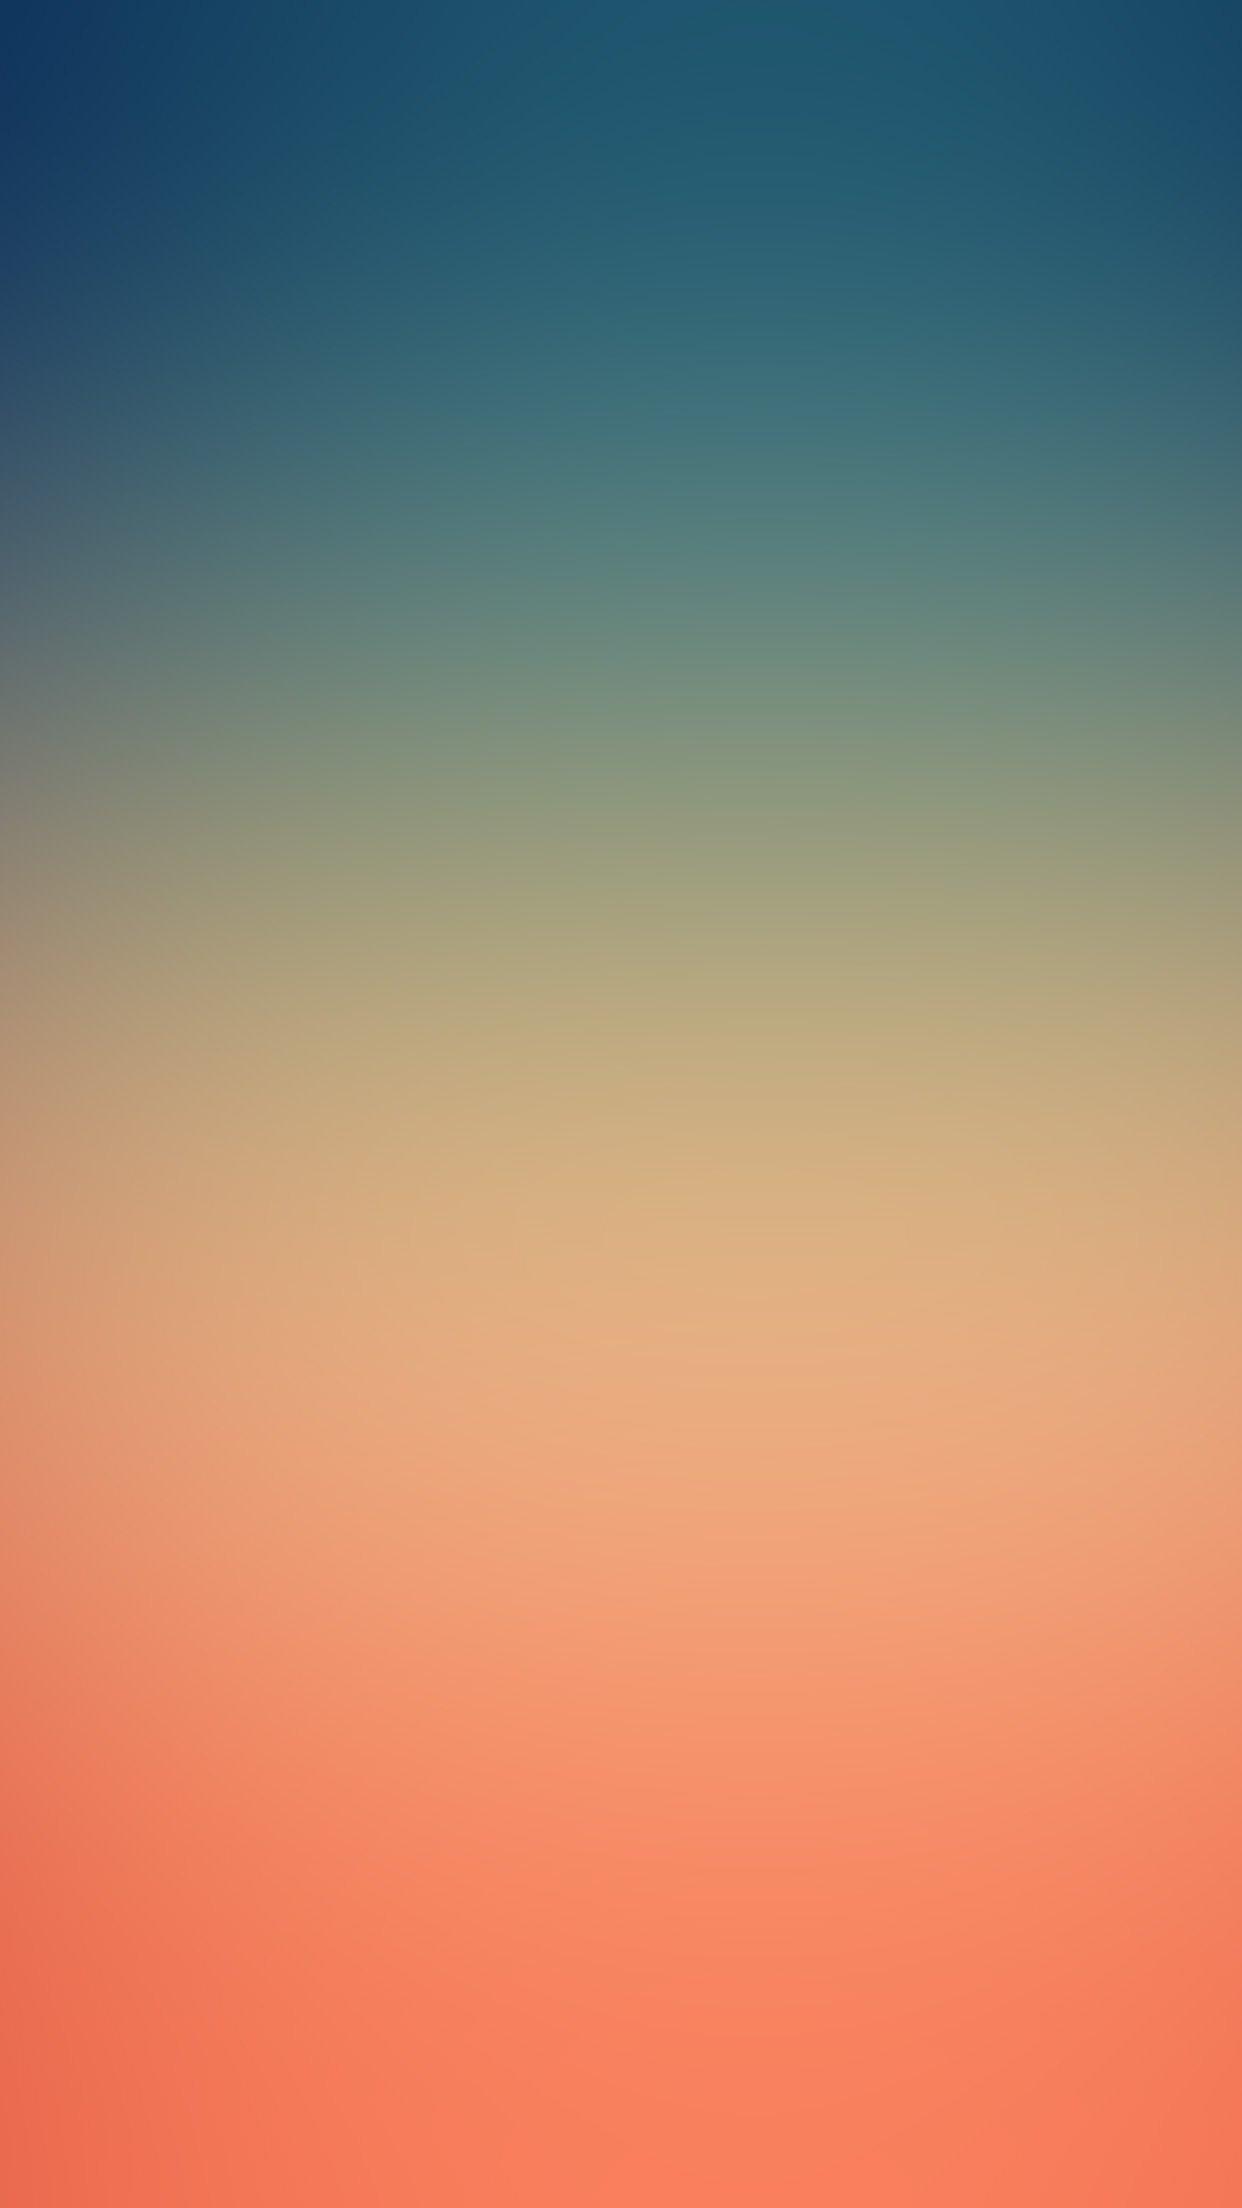 iPhone 8 wallpaper. blue orange night blur